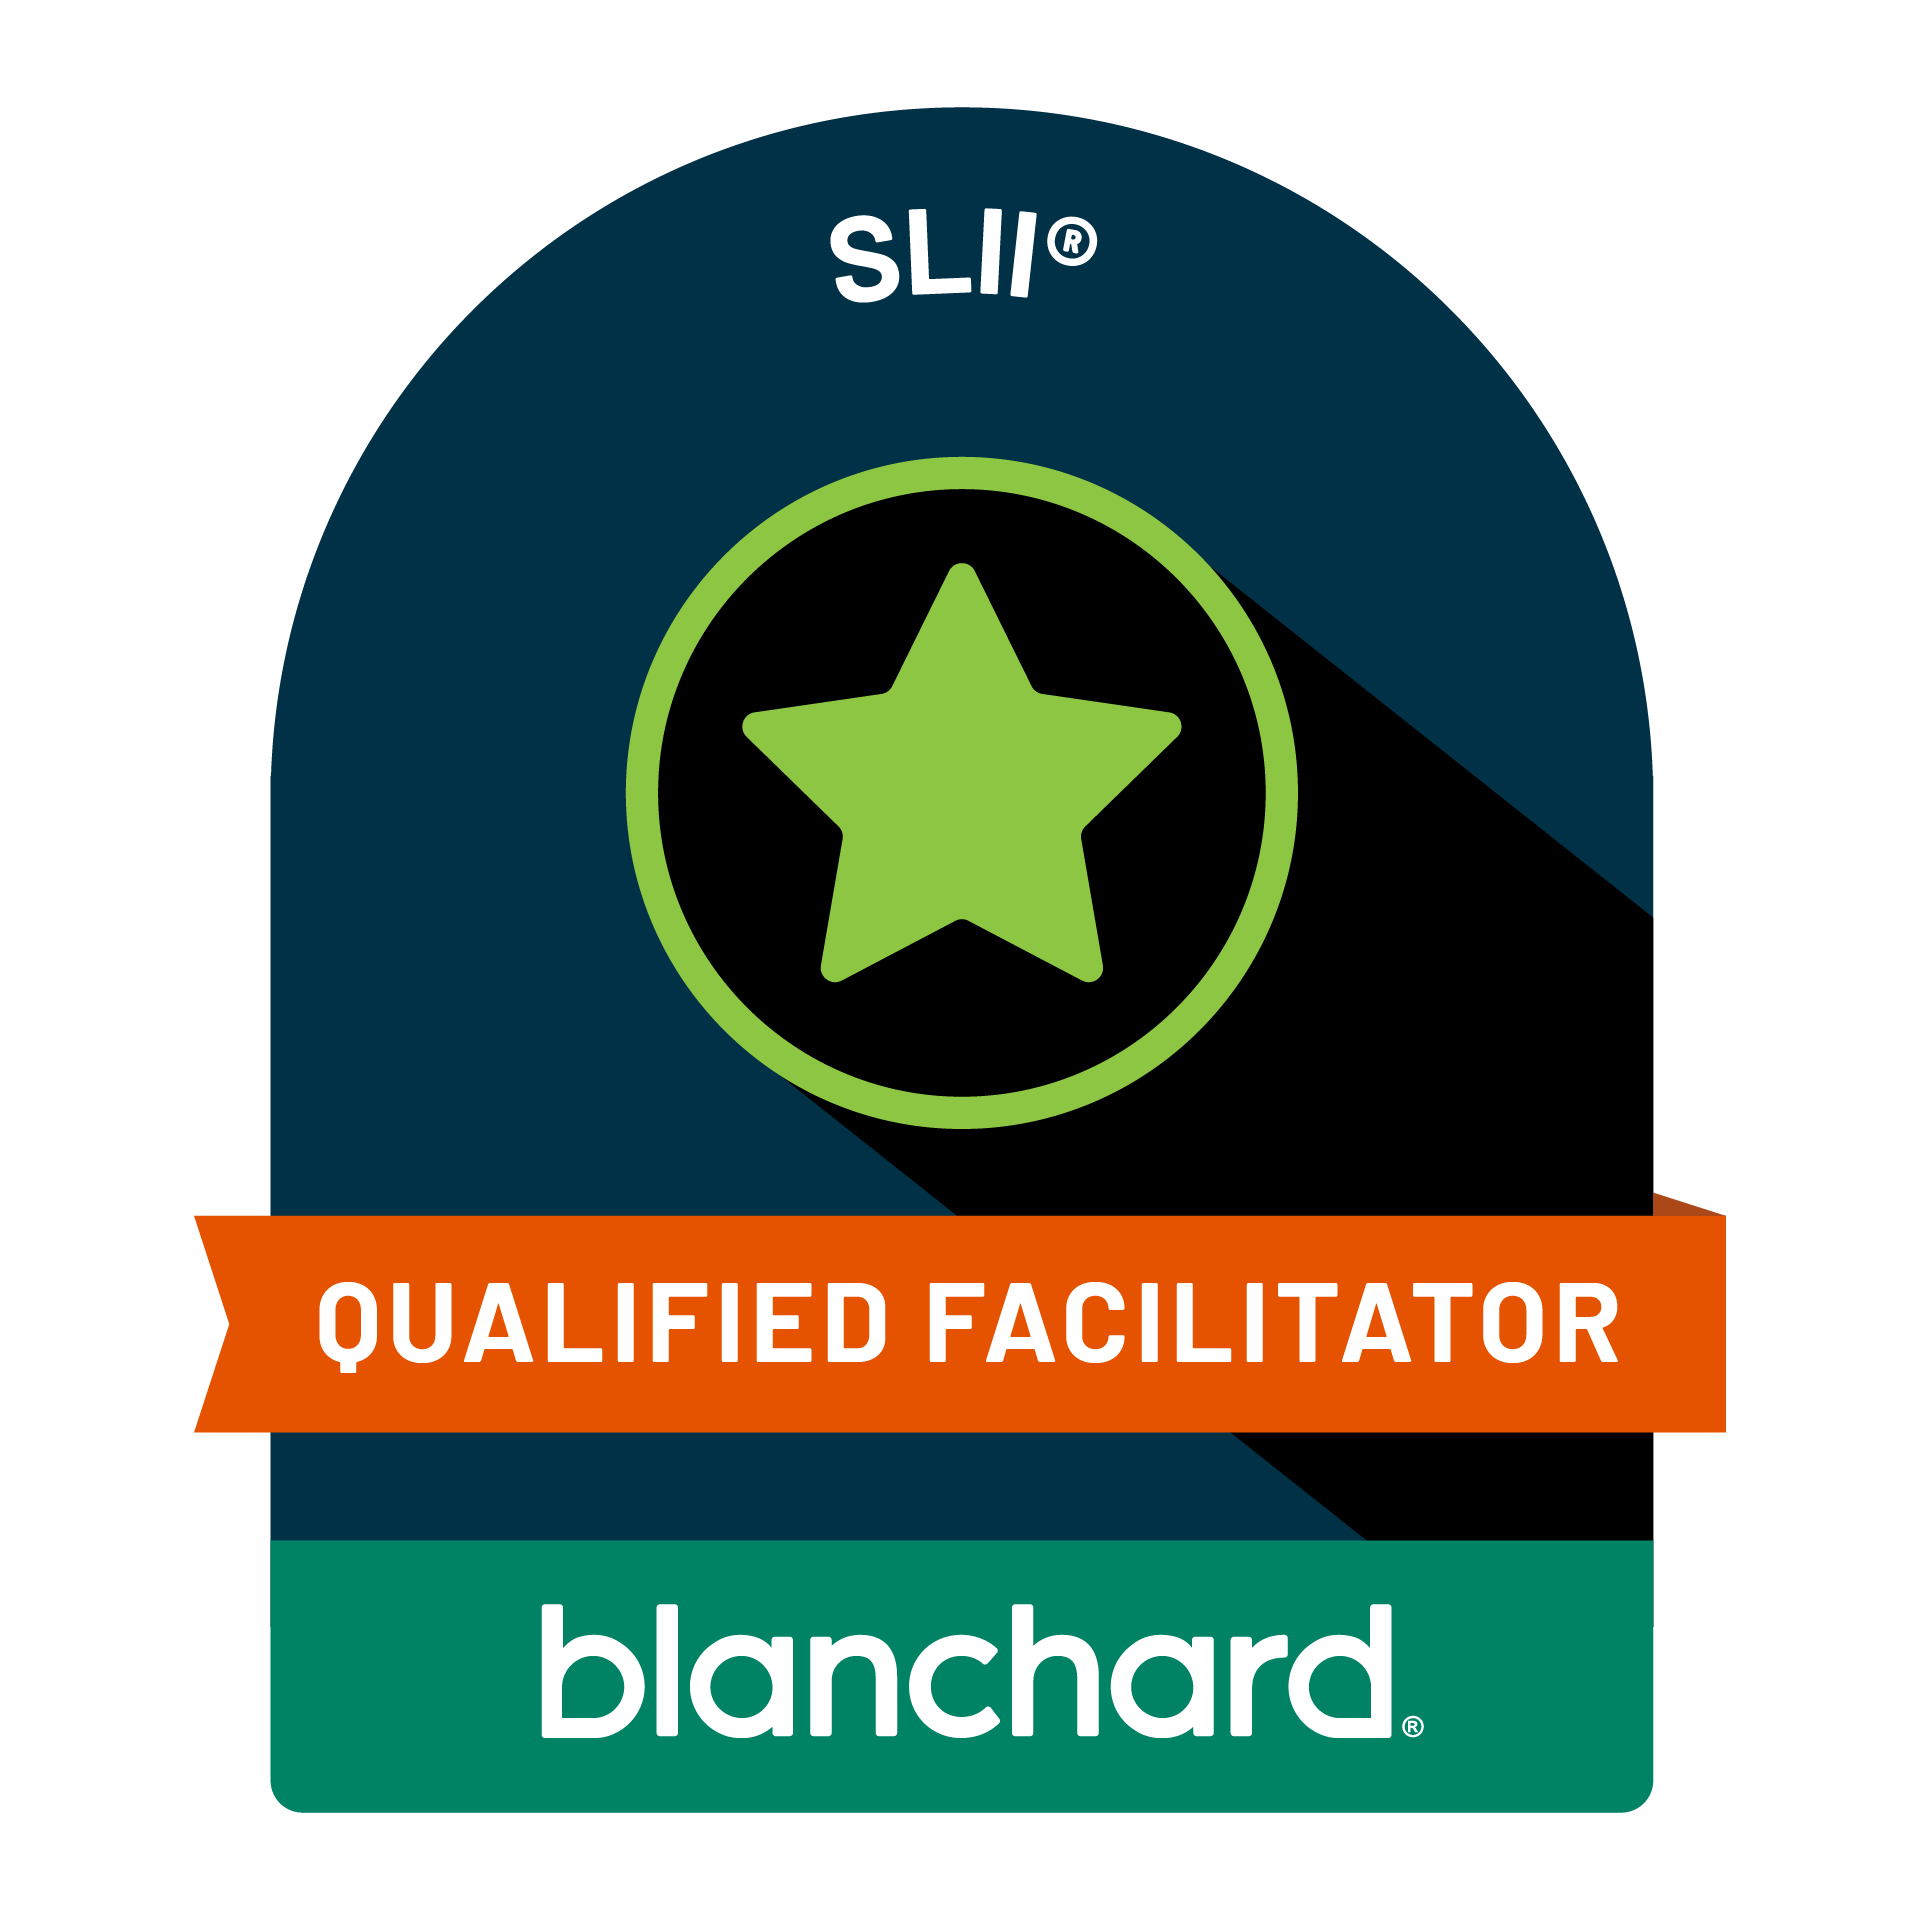 slii-qualified-facilitator.png